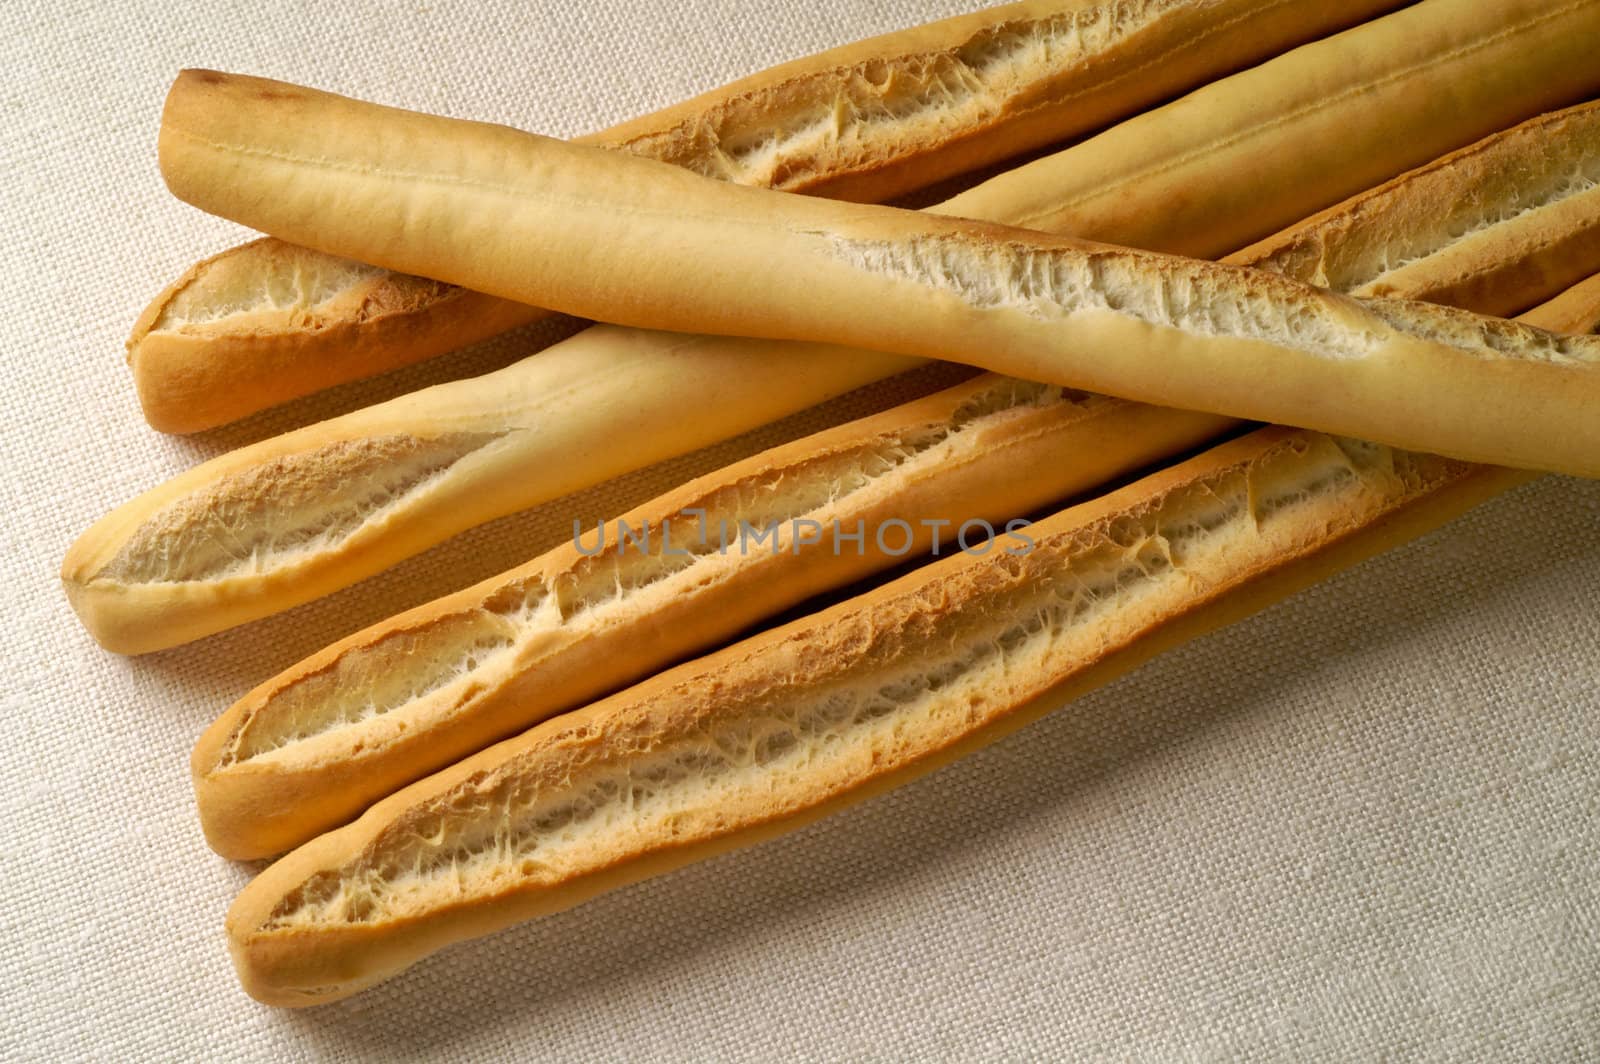 Grissini - Breadsticks on a linen napkin by Laborer